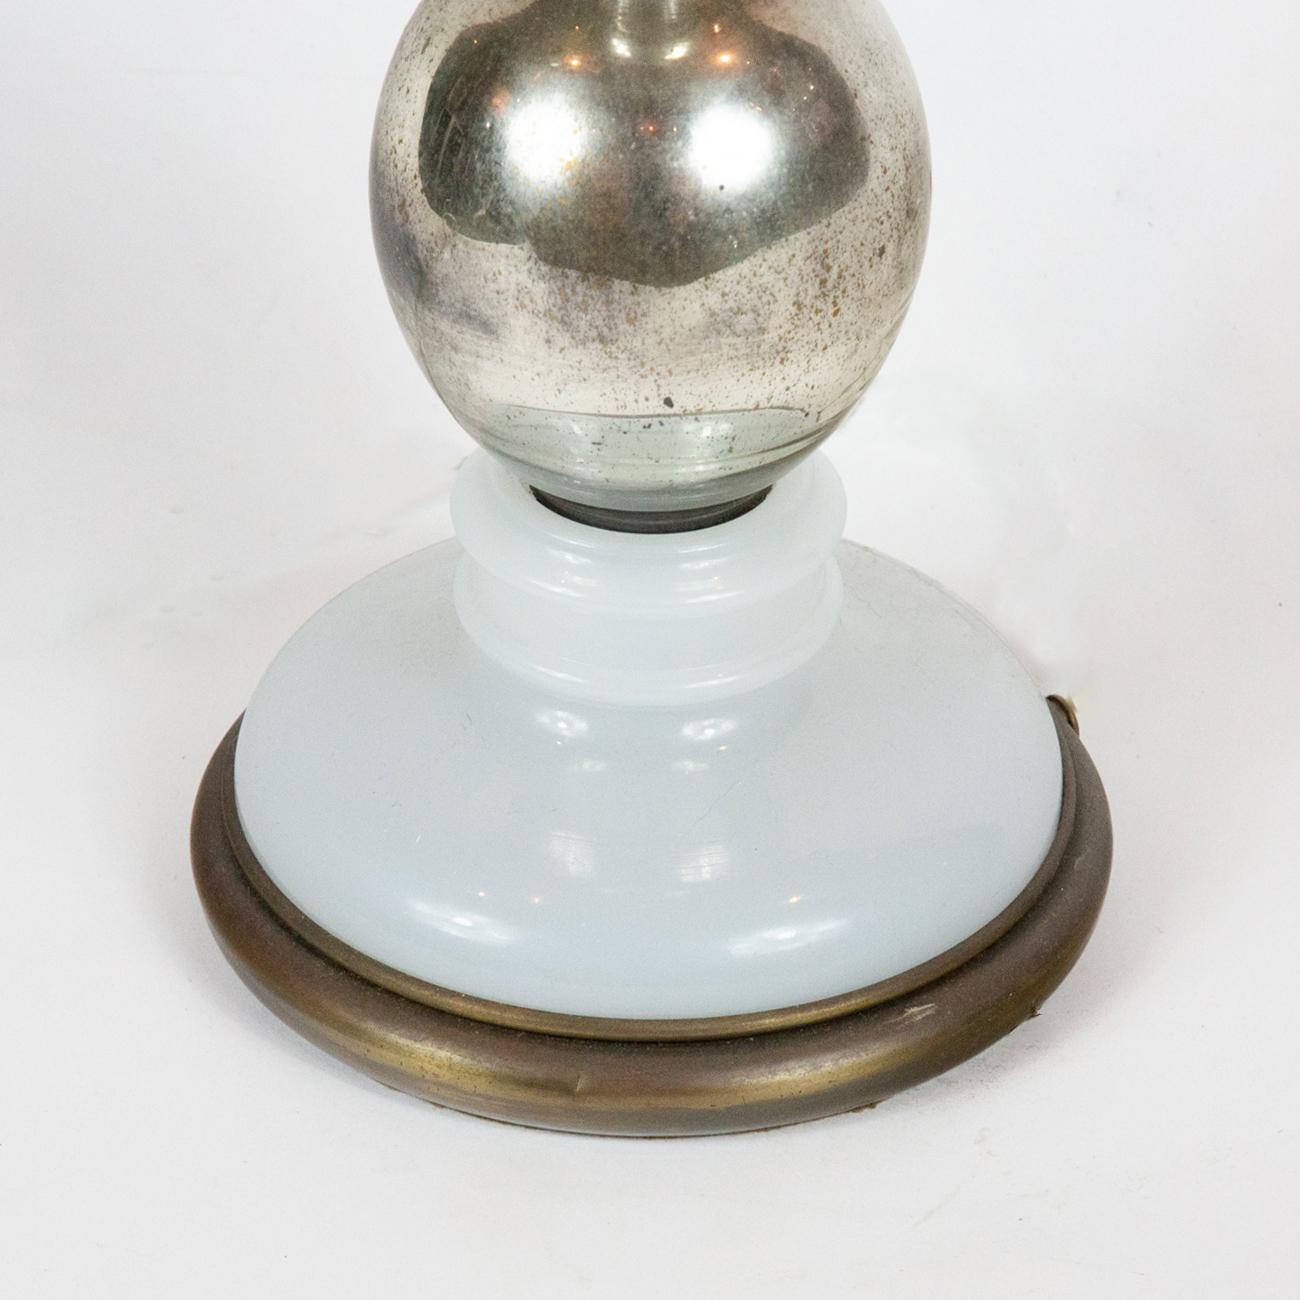 Mercury glass brass spigot lamp. Antique lamp with black shade. Measures: 36